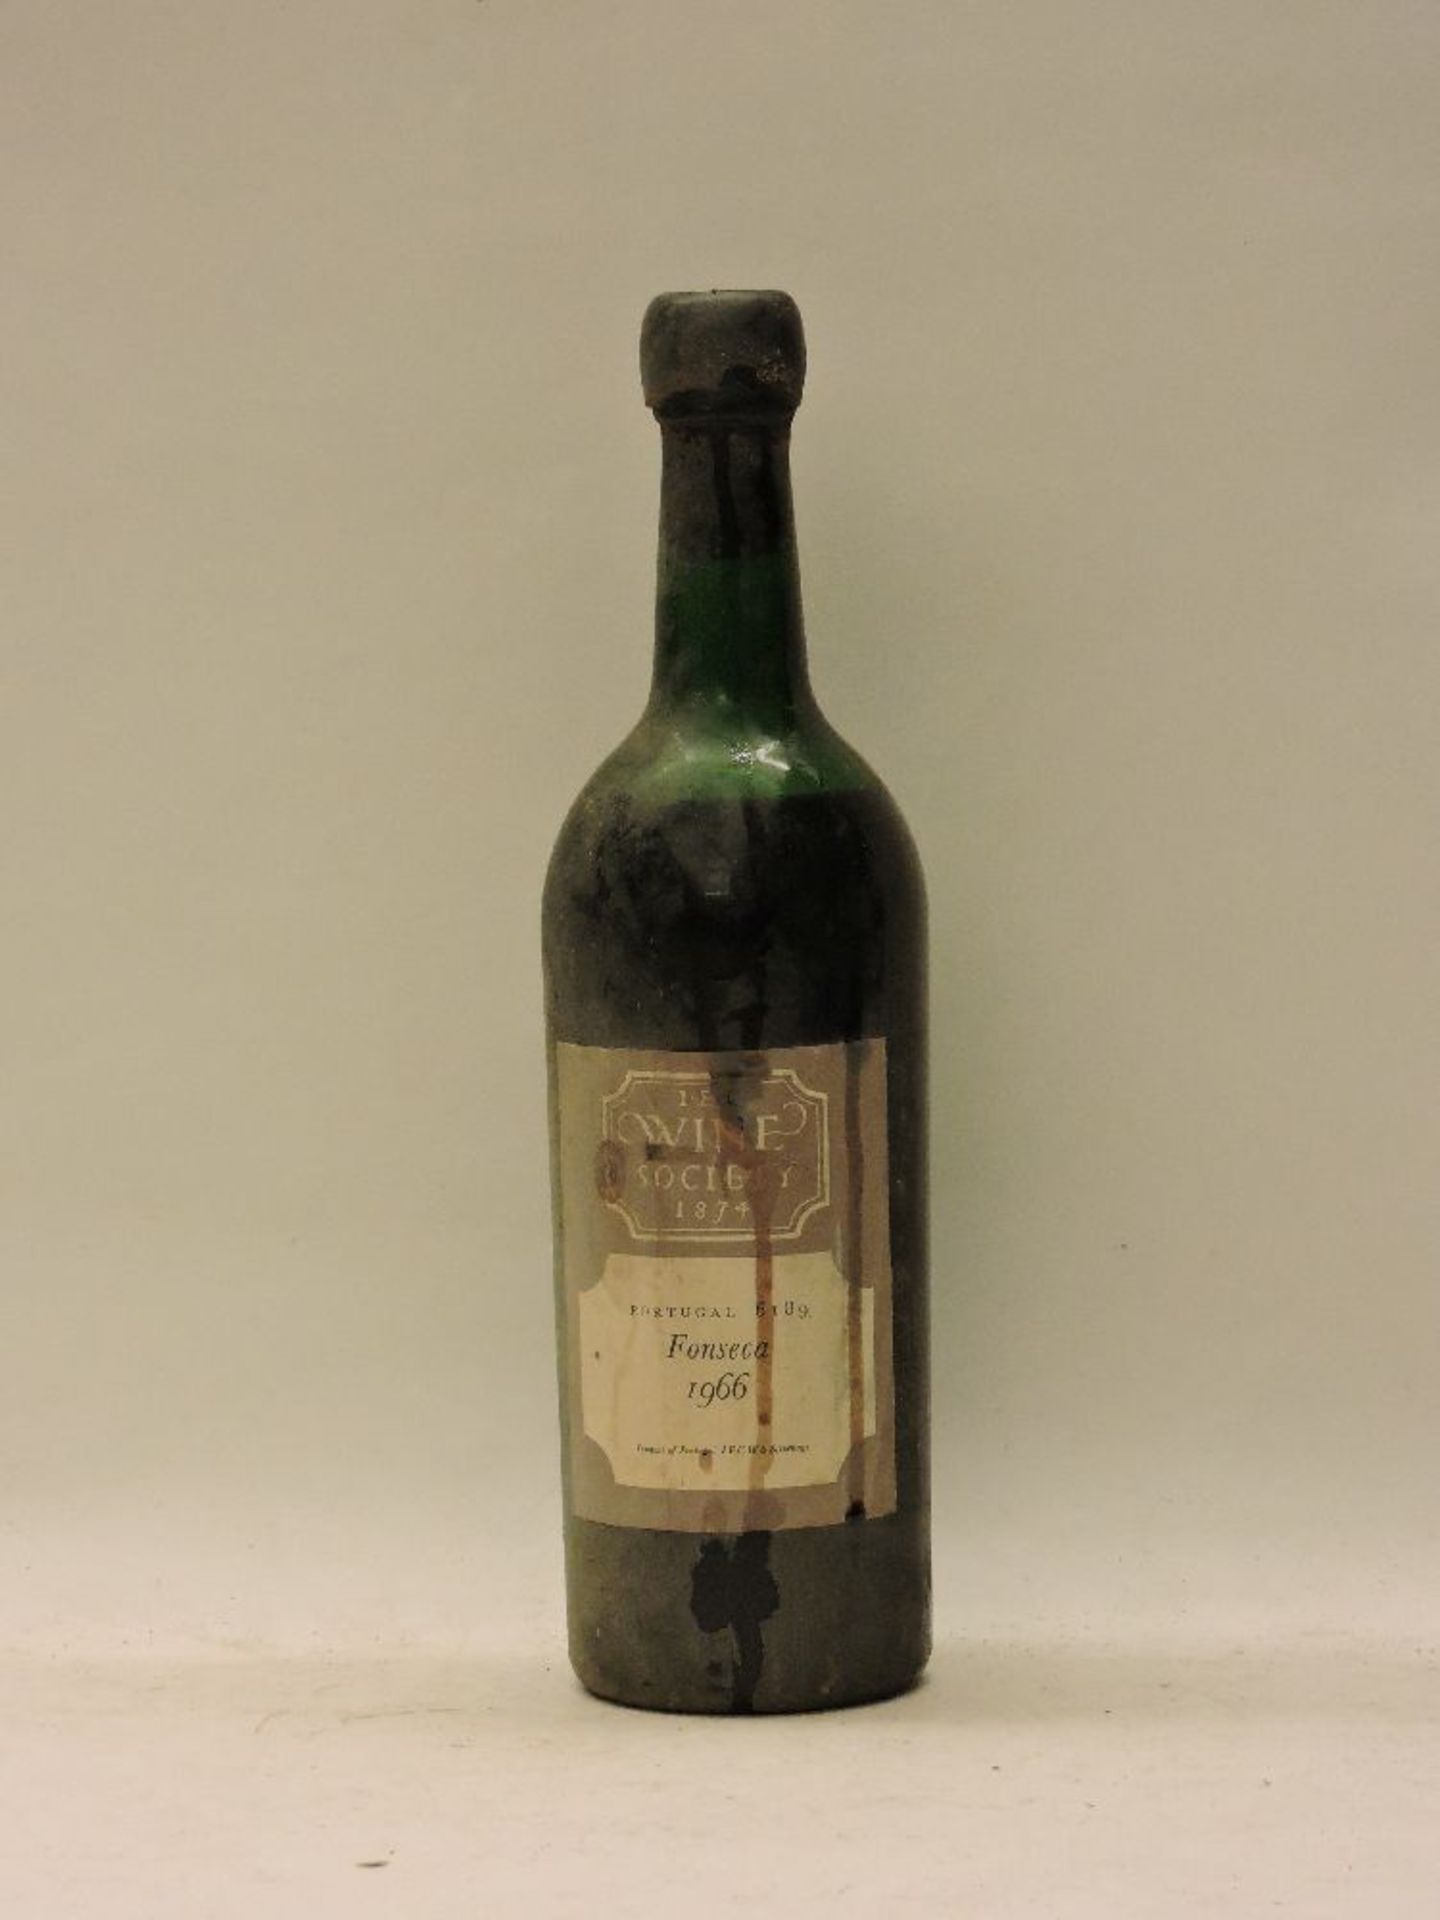 Fonseca, 1966, one bottle